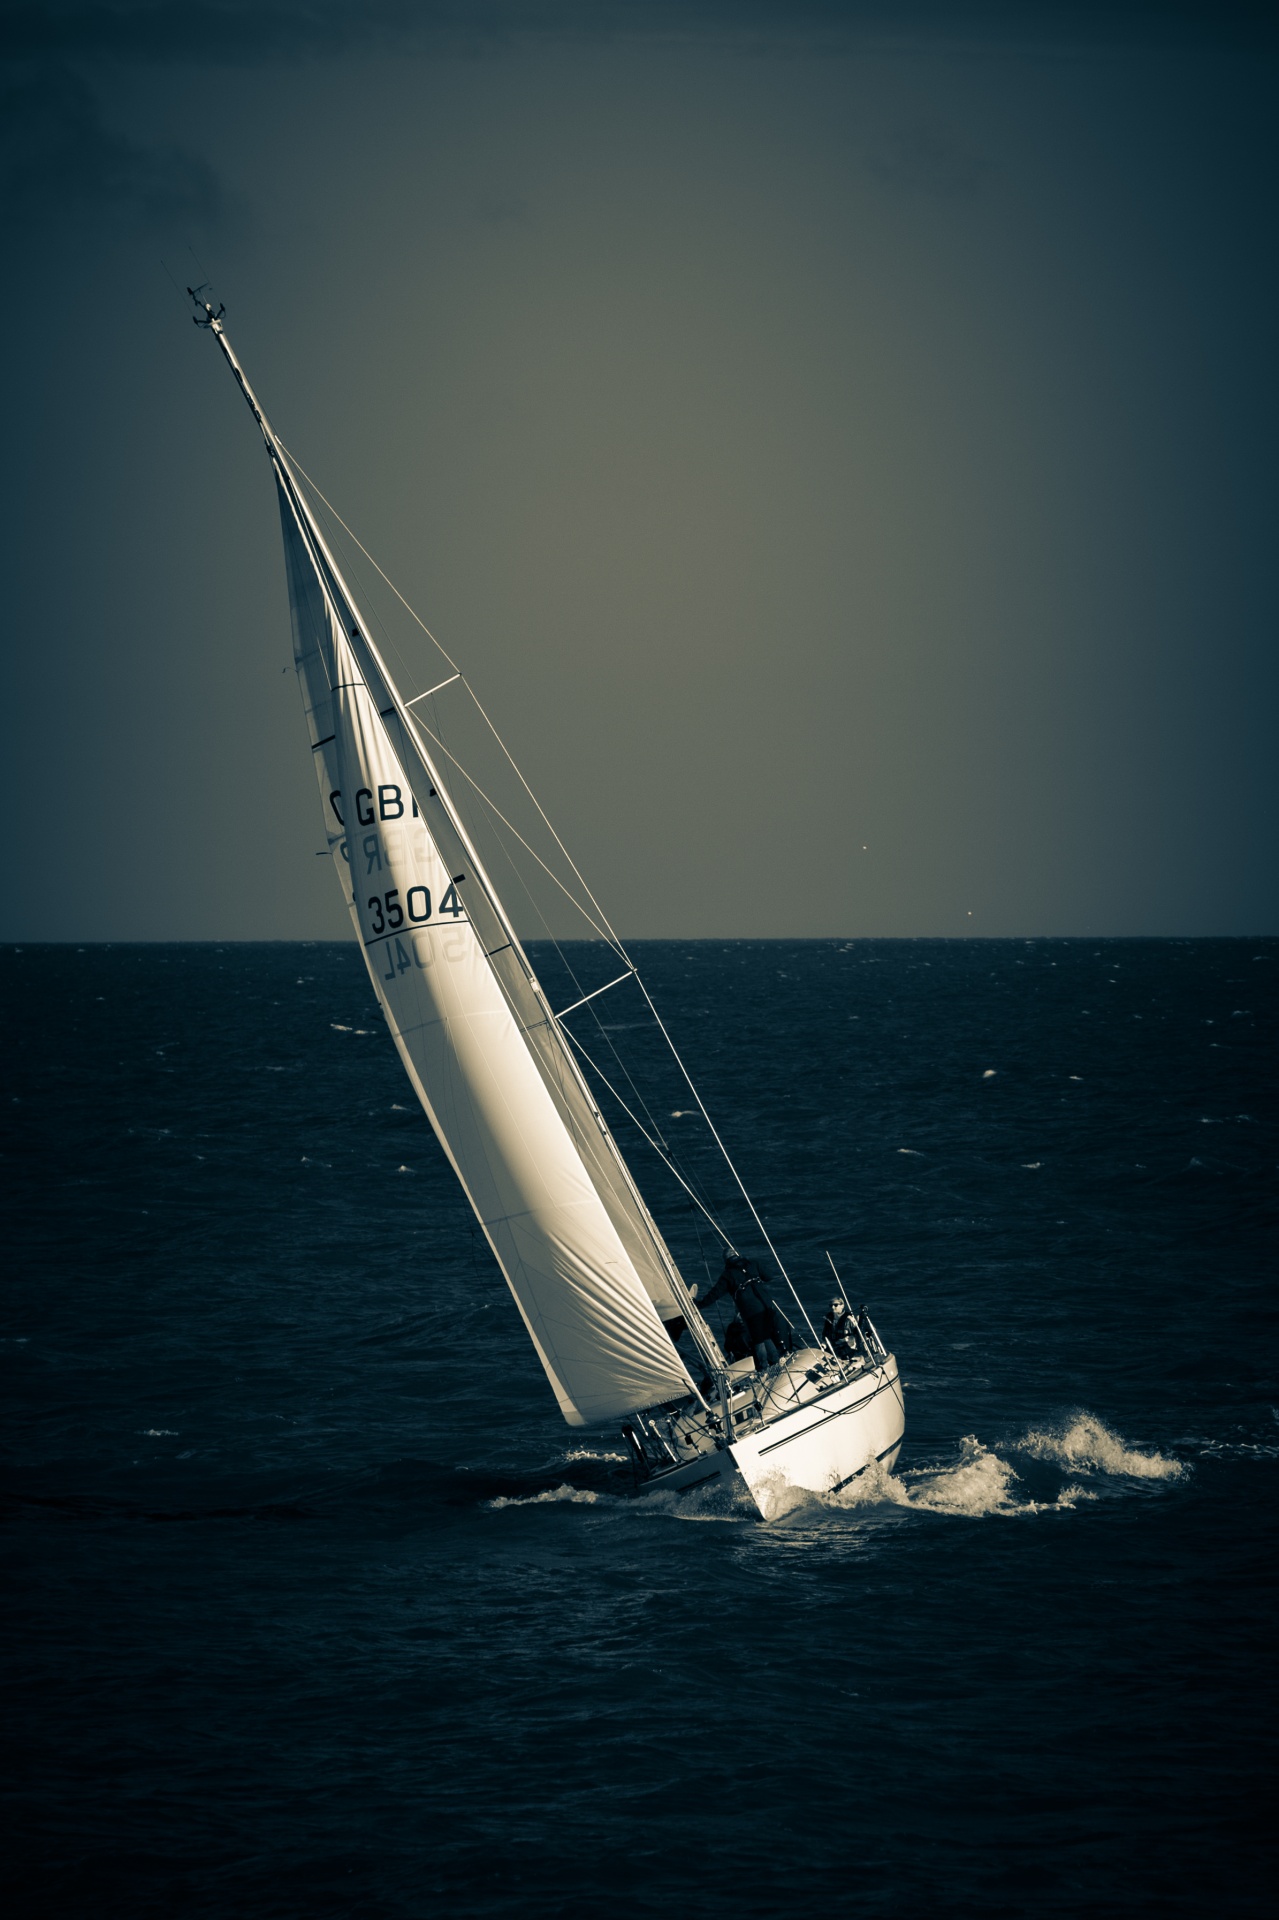 sailboat stock photo free